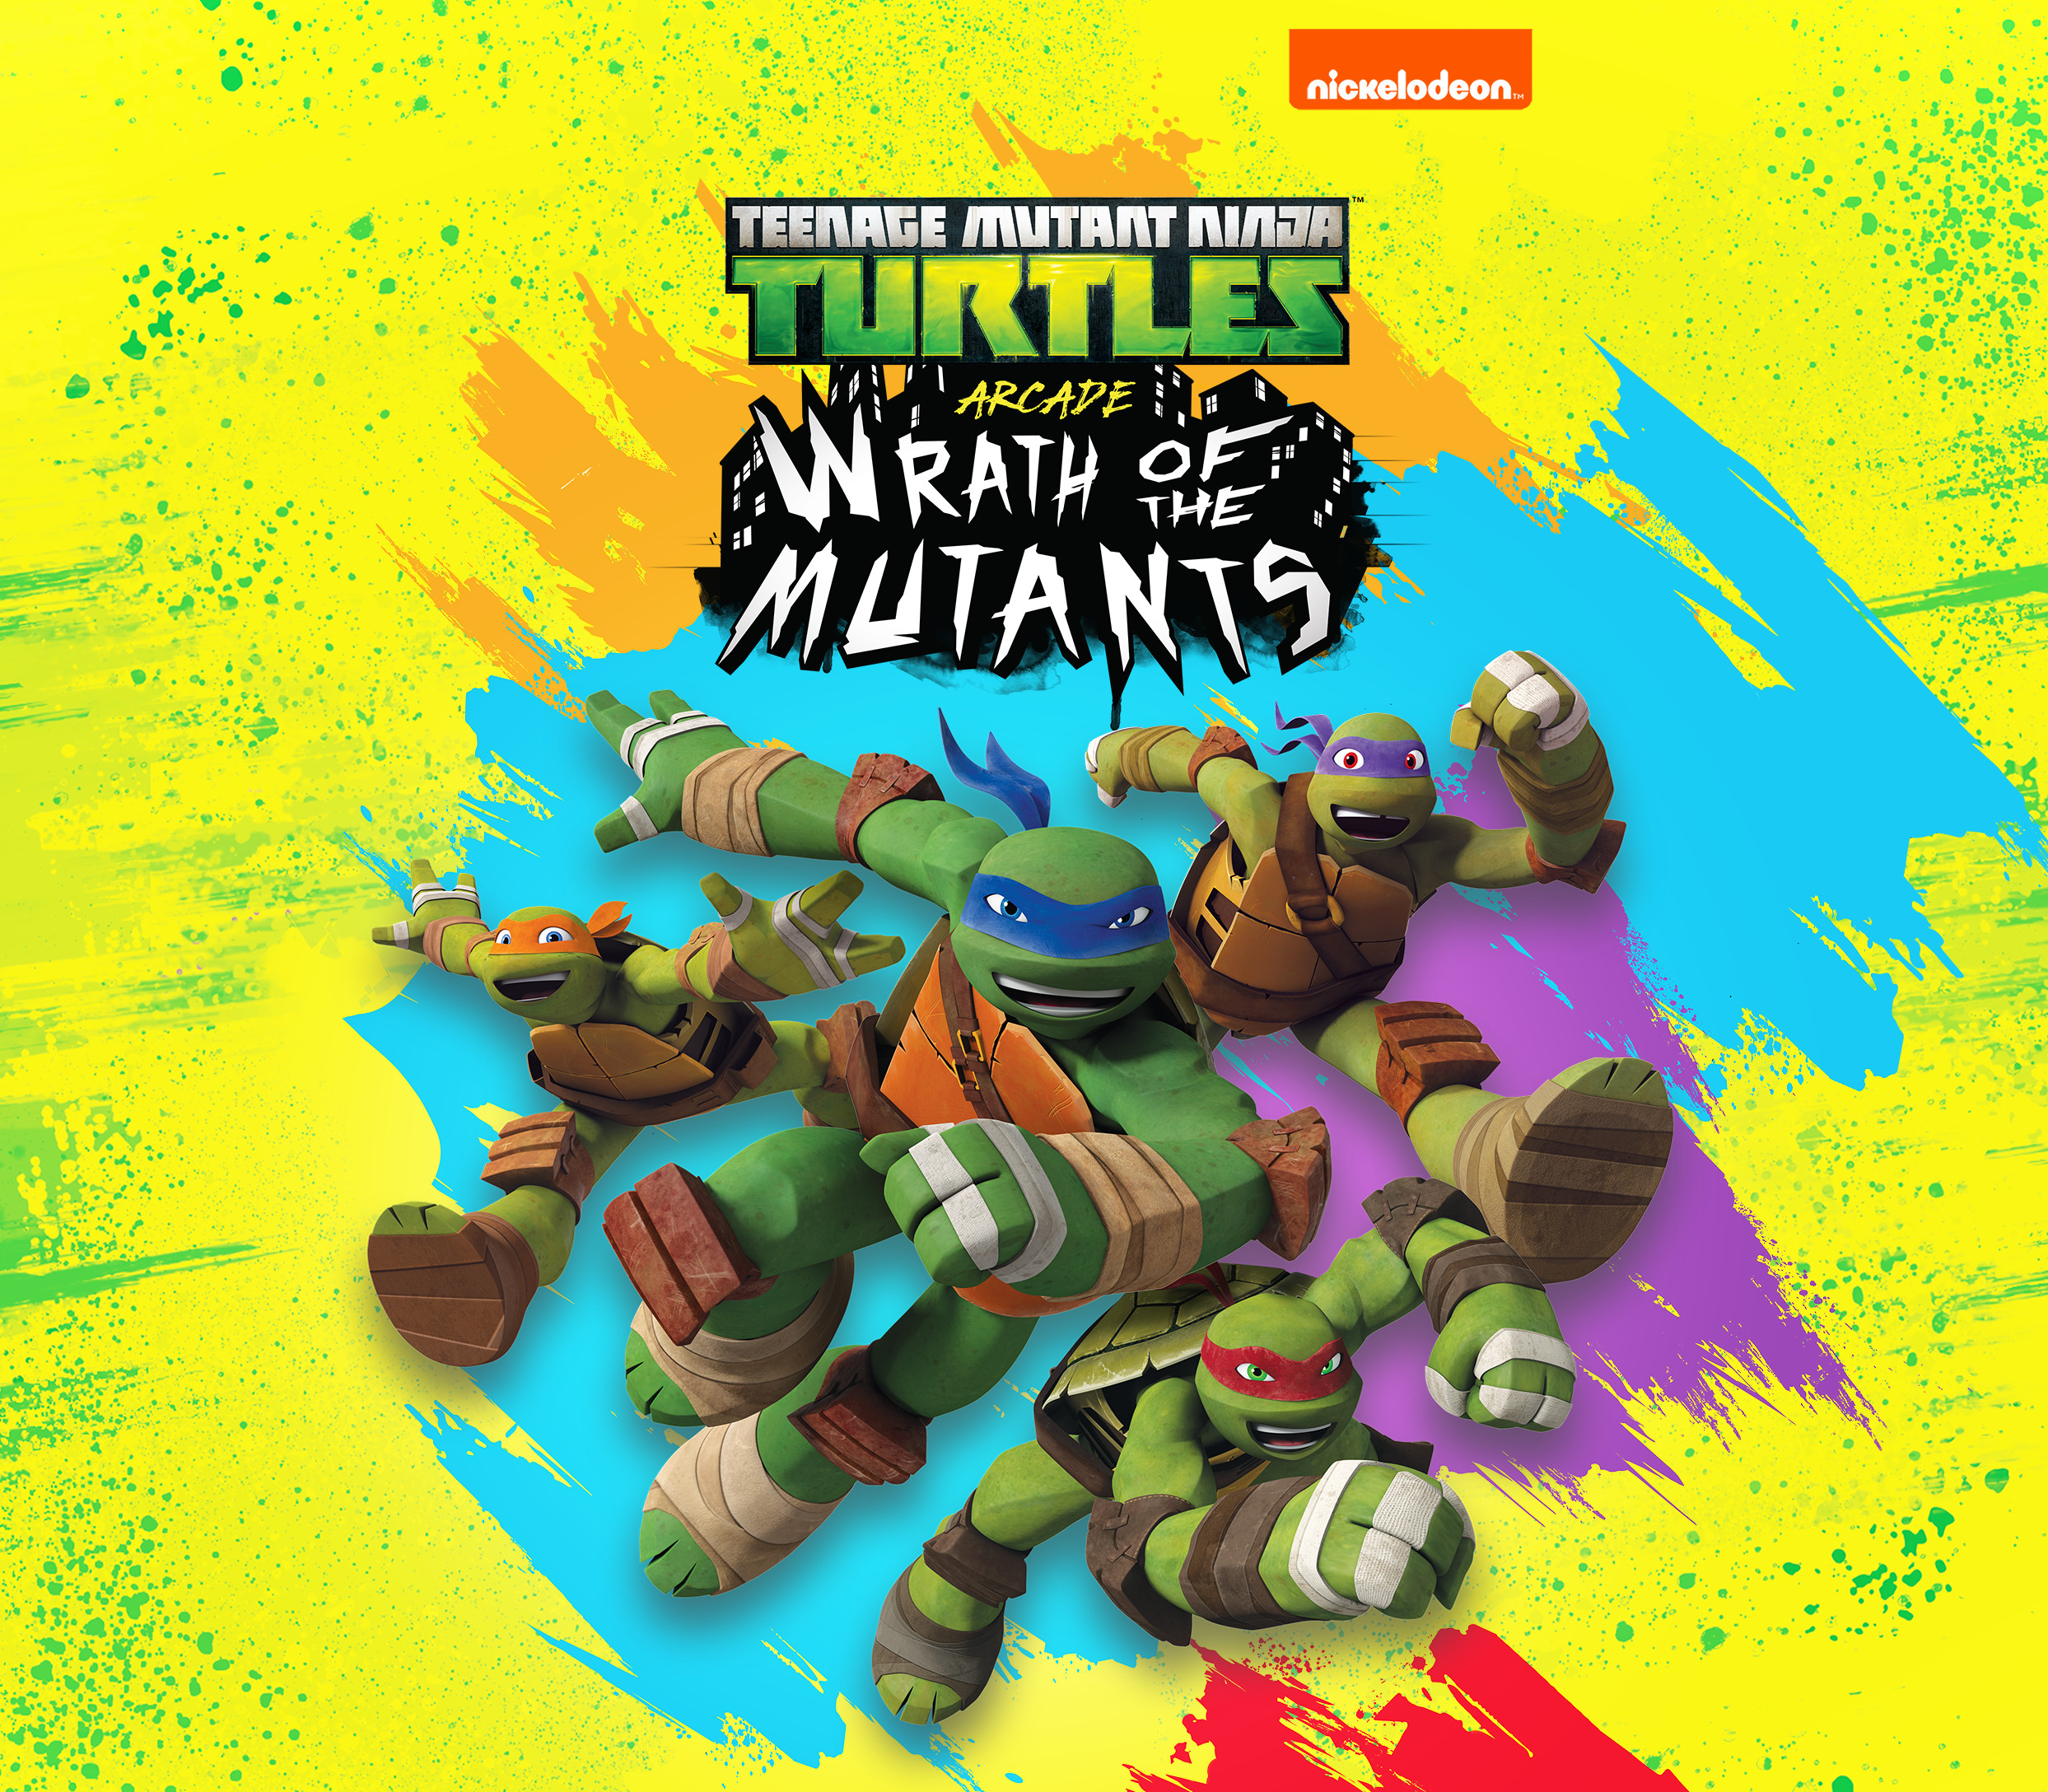 Teenage Mutant Ninja Turtles Arcade: Wrath of the Mutants EU XBOX One / Xbox Series X|S / Windows 10